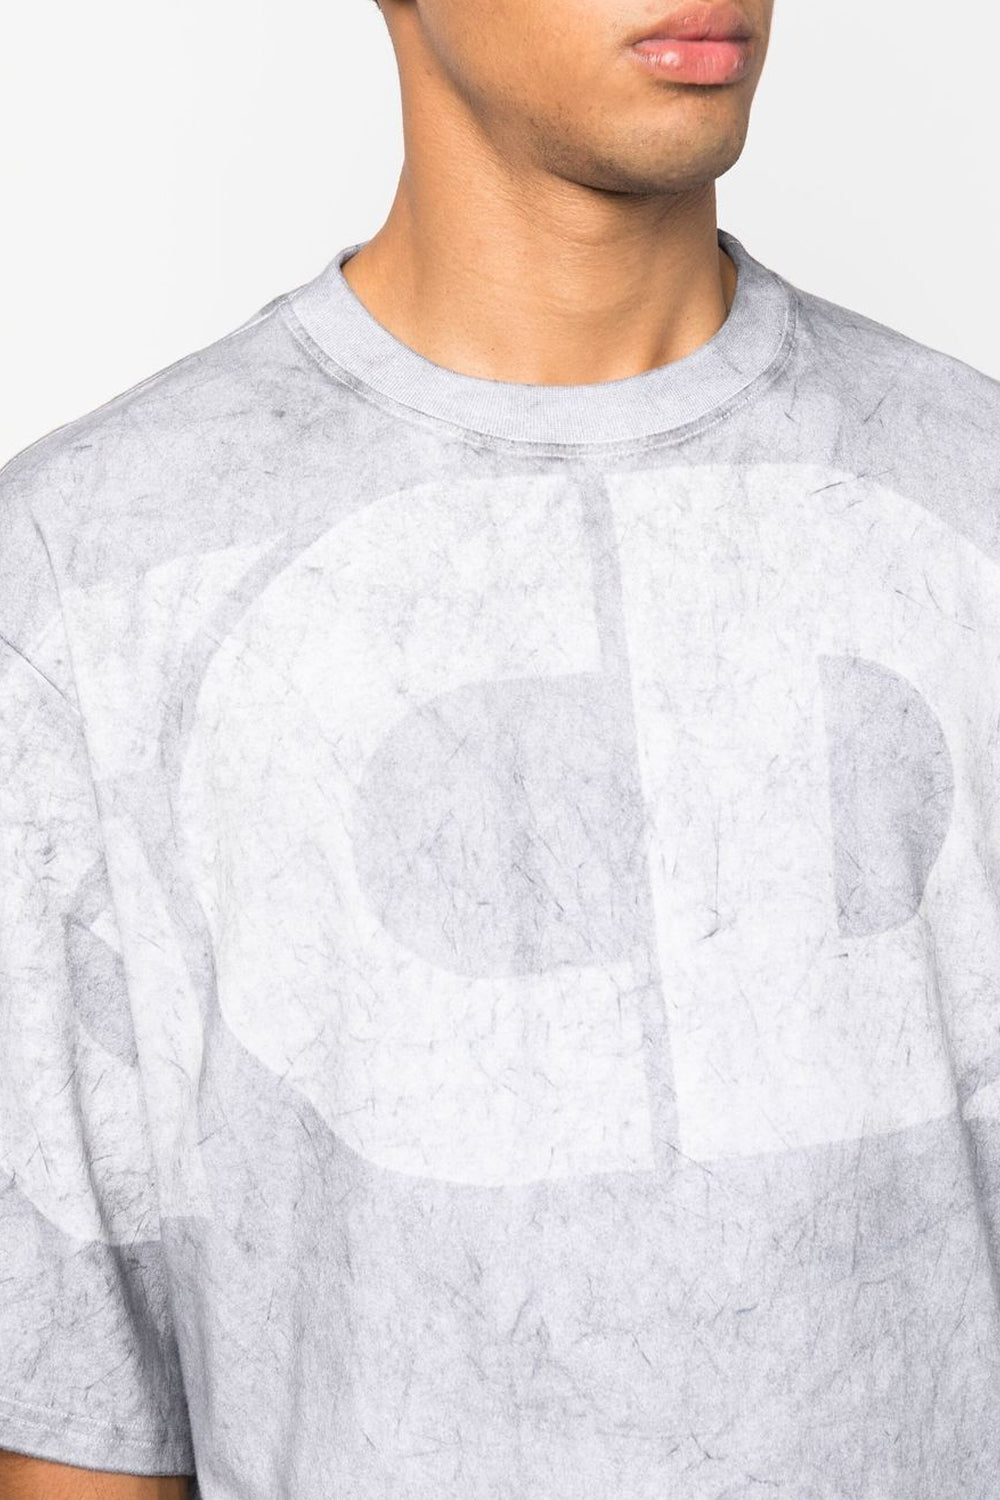 Gcds distressed effect logo print cotton T-shirt